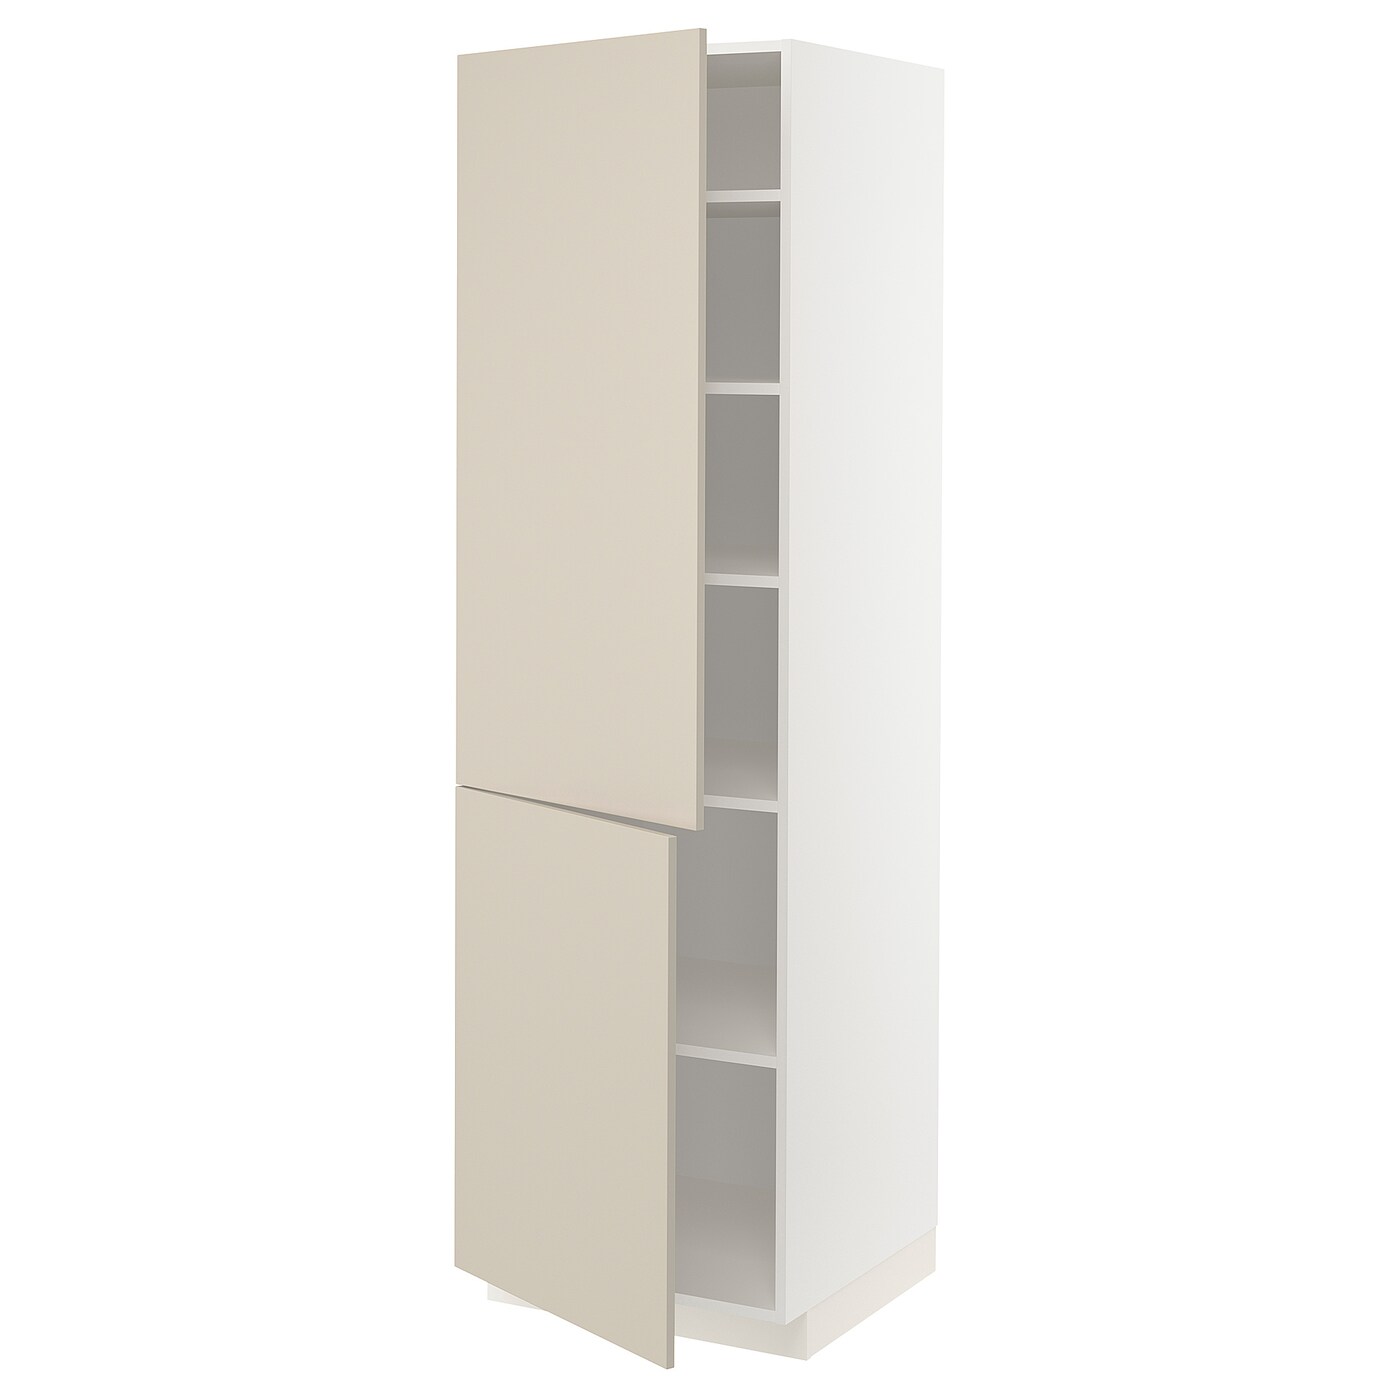 Высокий кухонный шкаф с полками - IKEA METOD/МЕТОД ИКЕА, 220х60х40 см, белый/бежевый